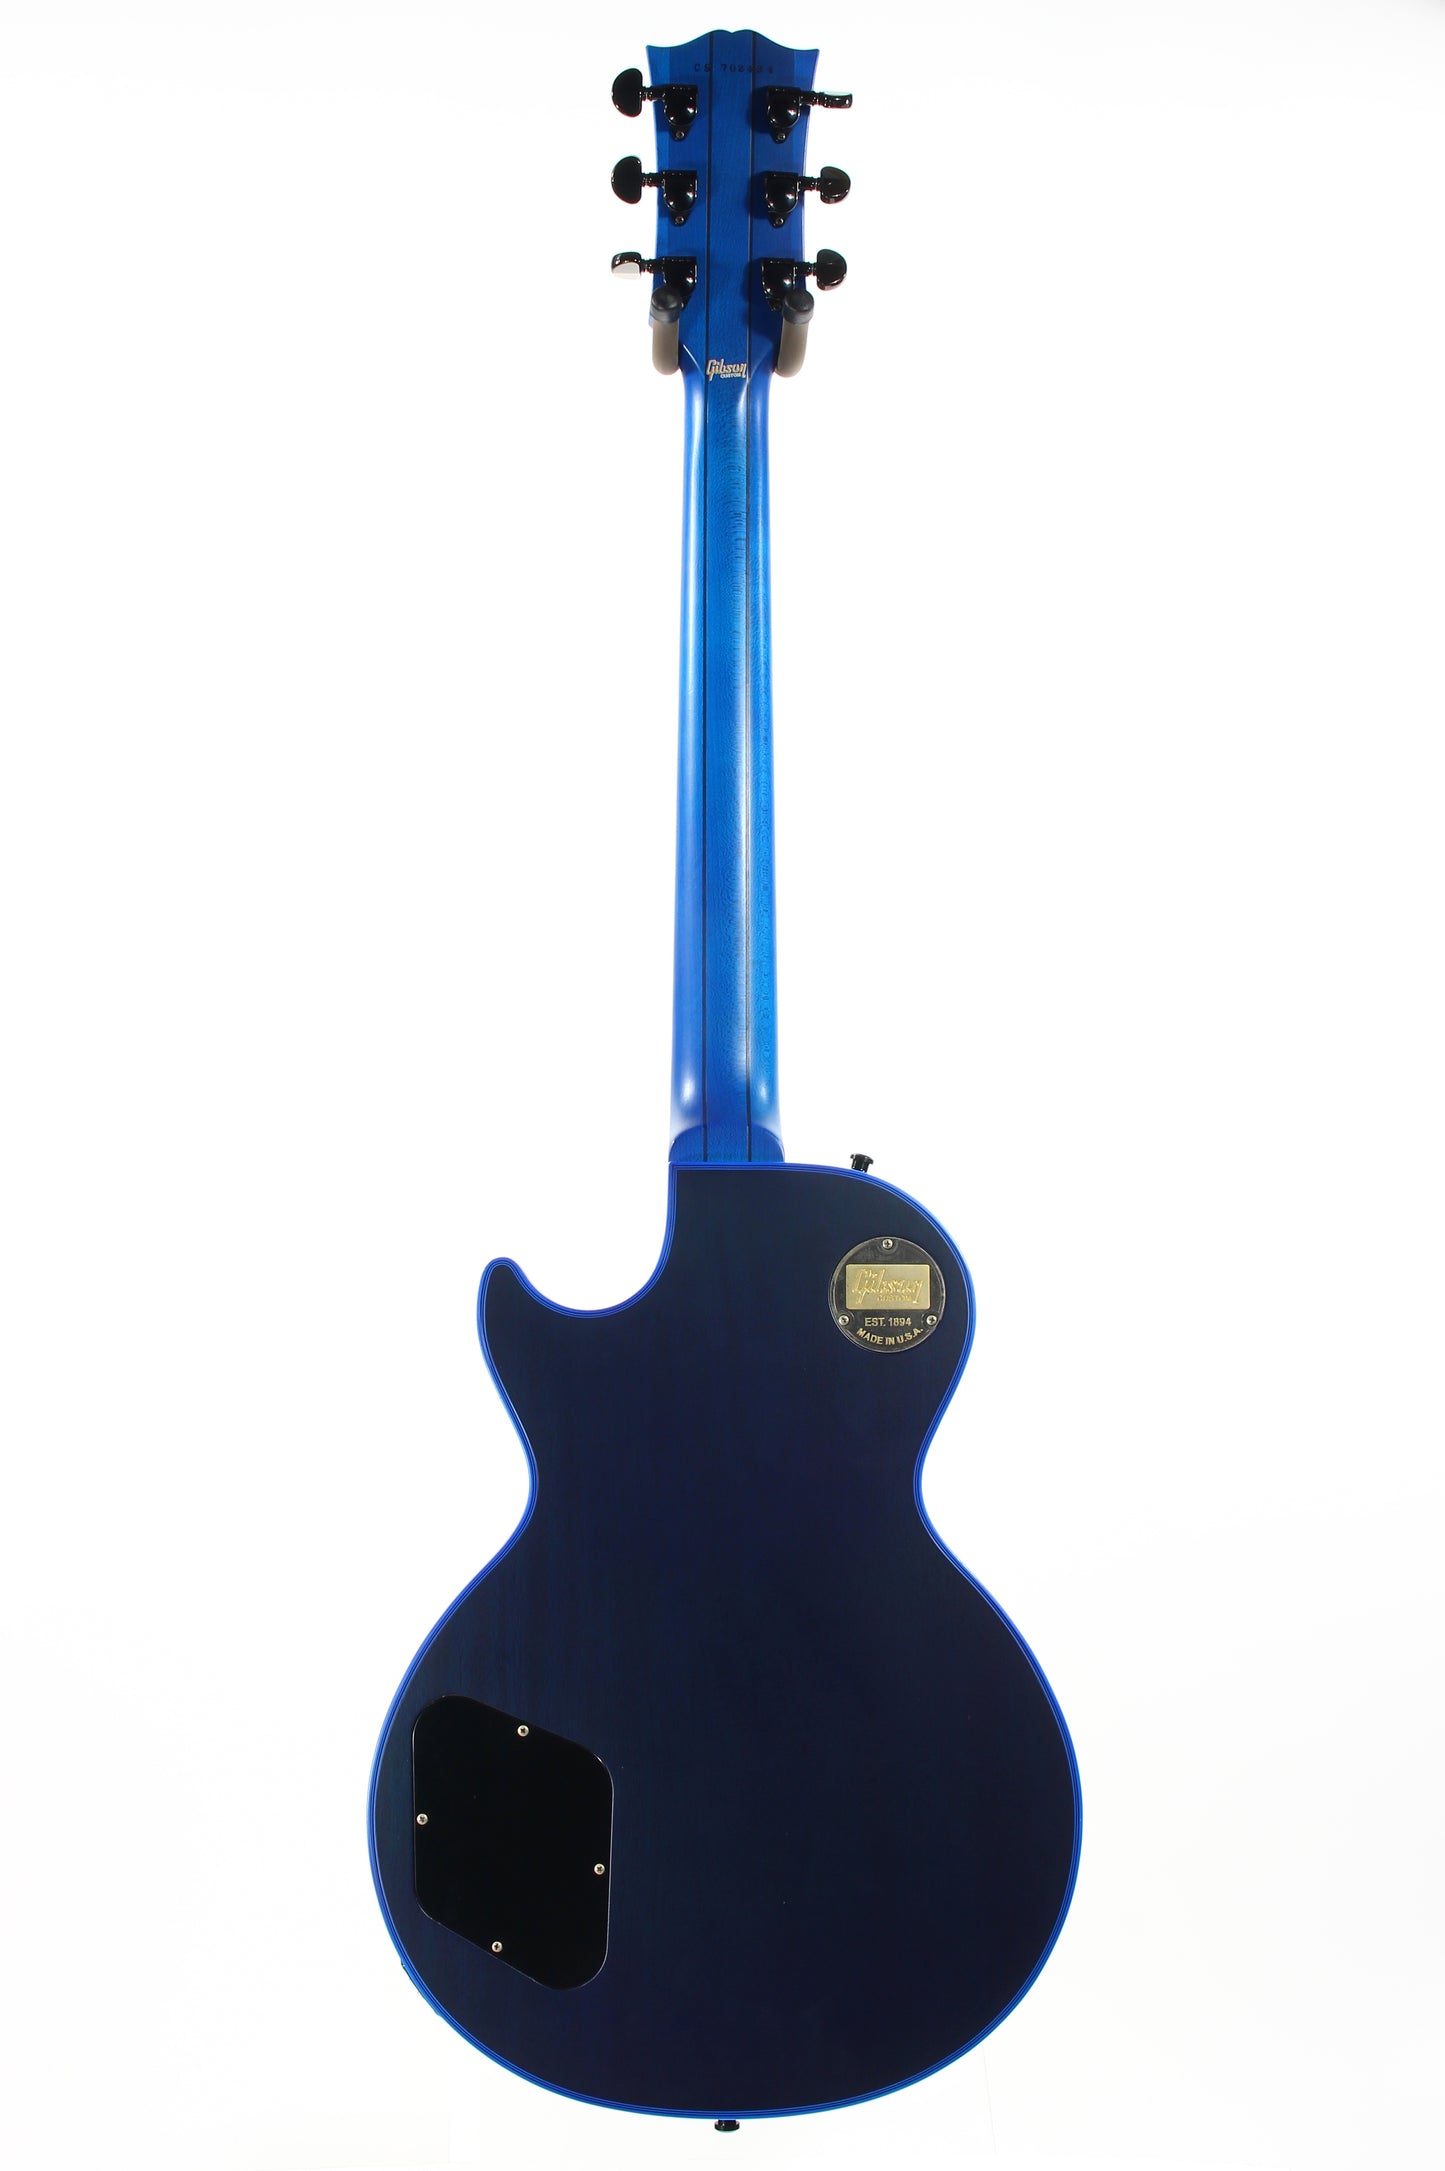 2017 Gibson Custom Shop Les Paul SATIN BLUE BURST WIDOW -- Rare Limited Edition! Maple Neck!